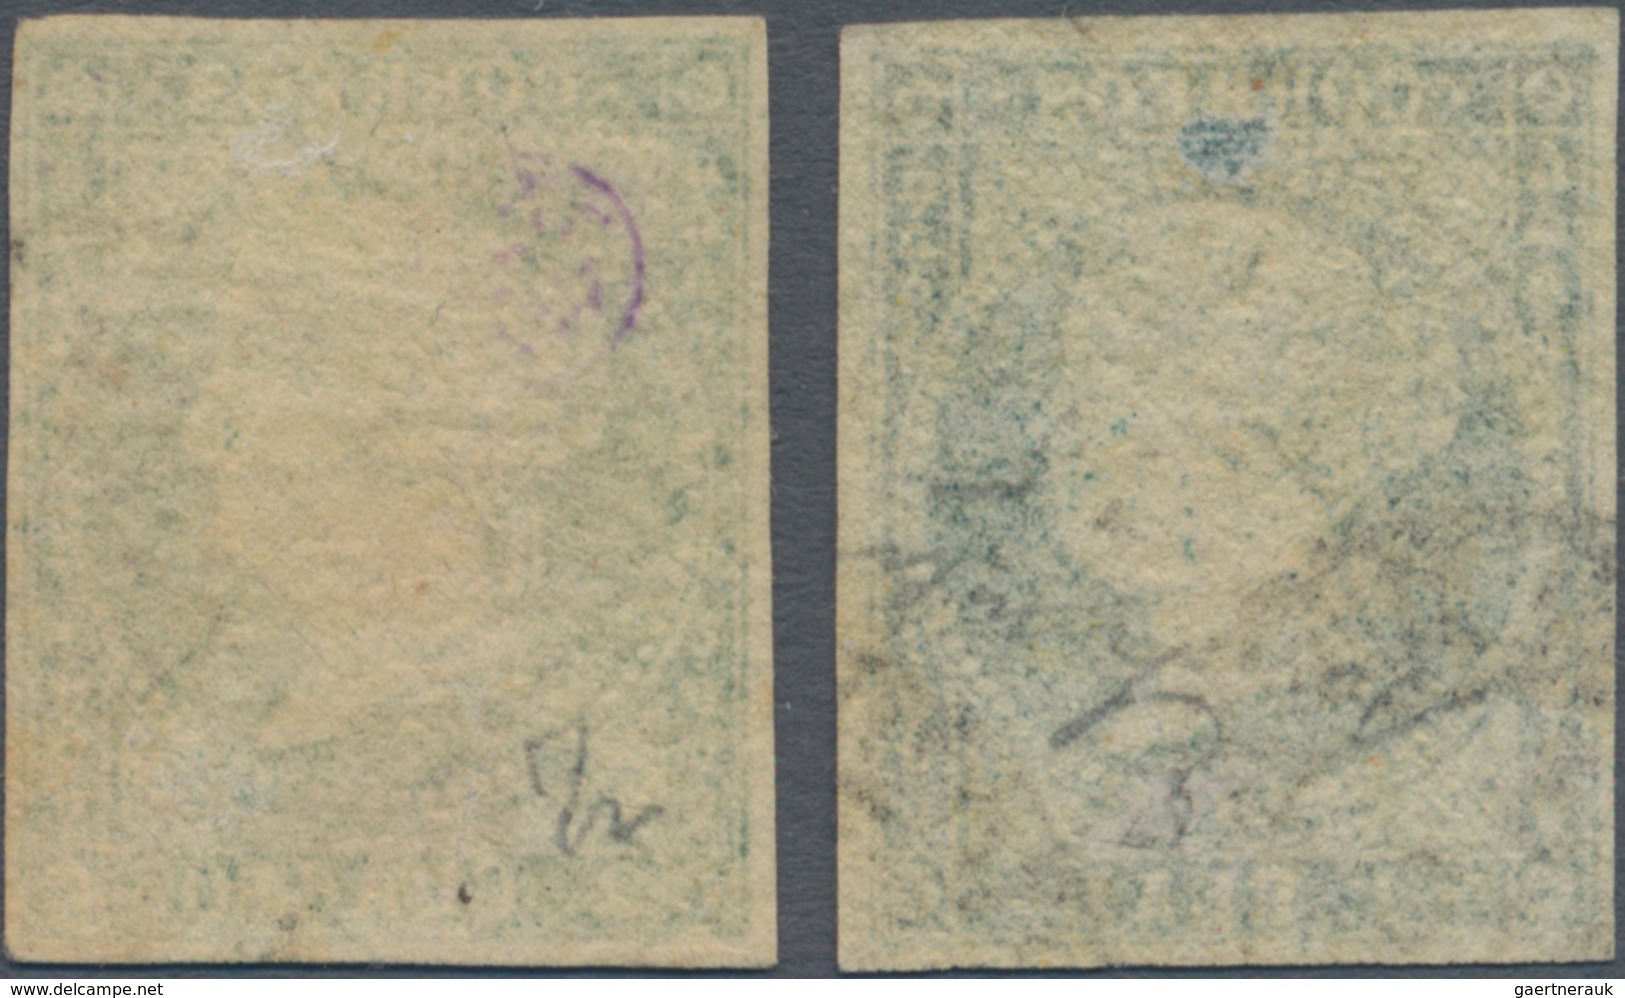 Spanien: 1856, Isabella Watermark Crossed Lines, 2 R. Green (matasello Fechador) And 4 R.greenishblu - Gebraucht